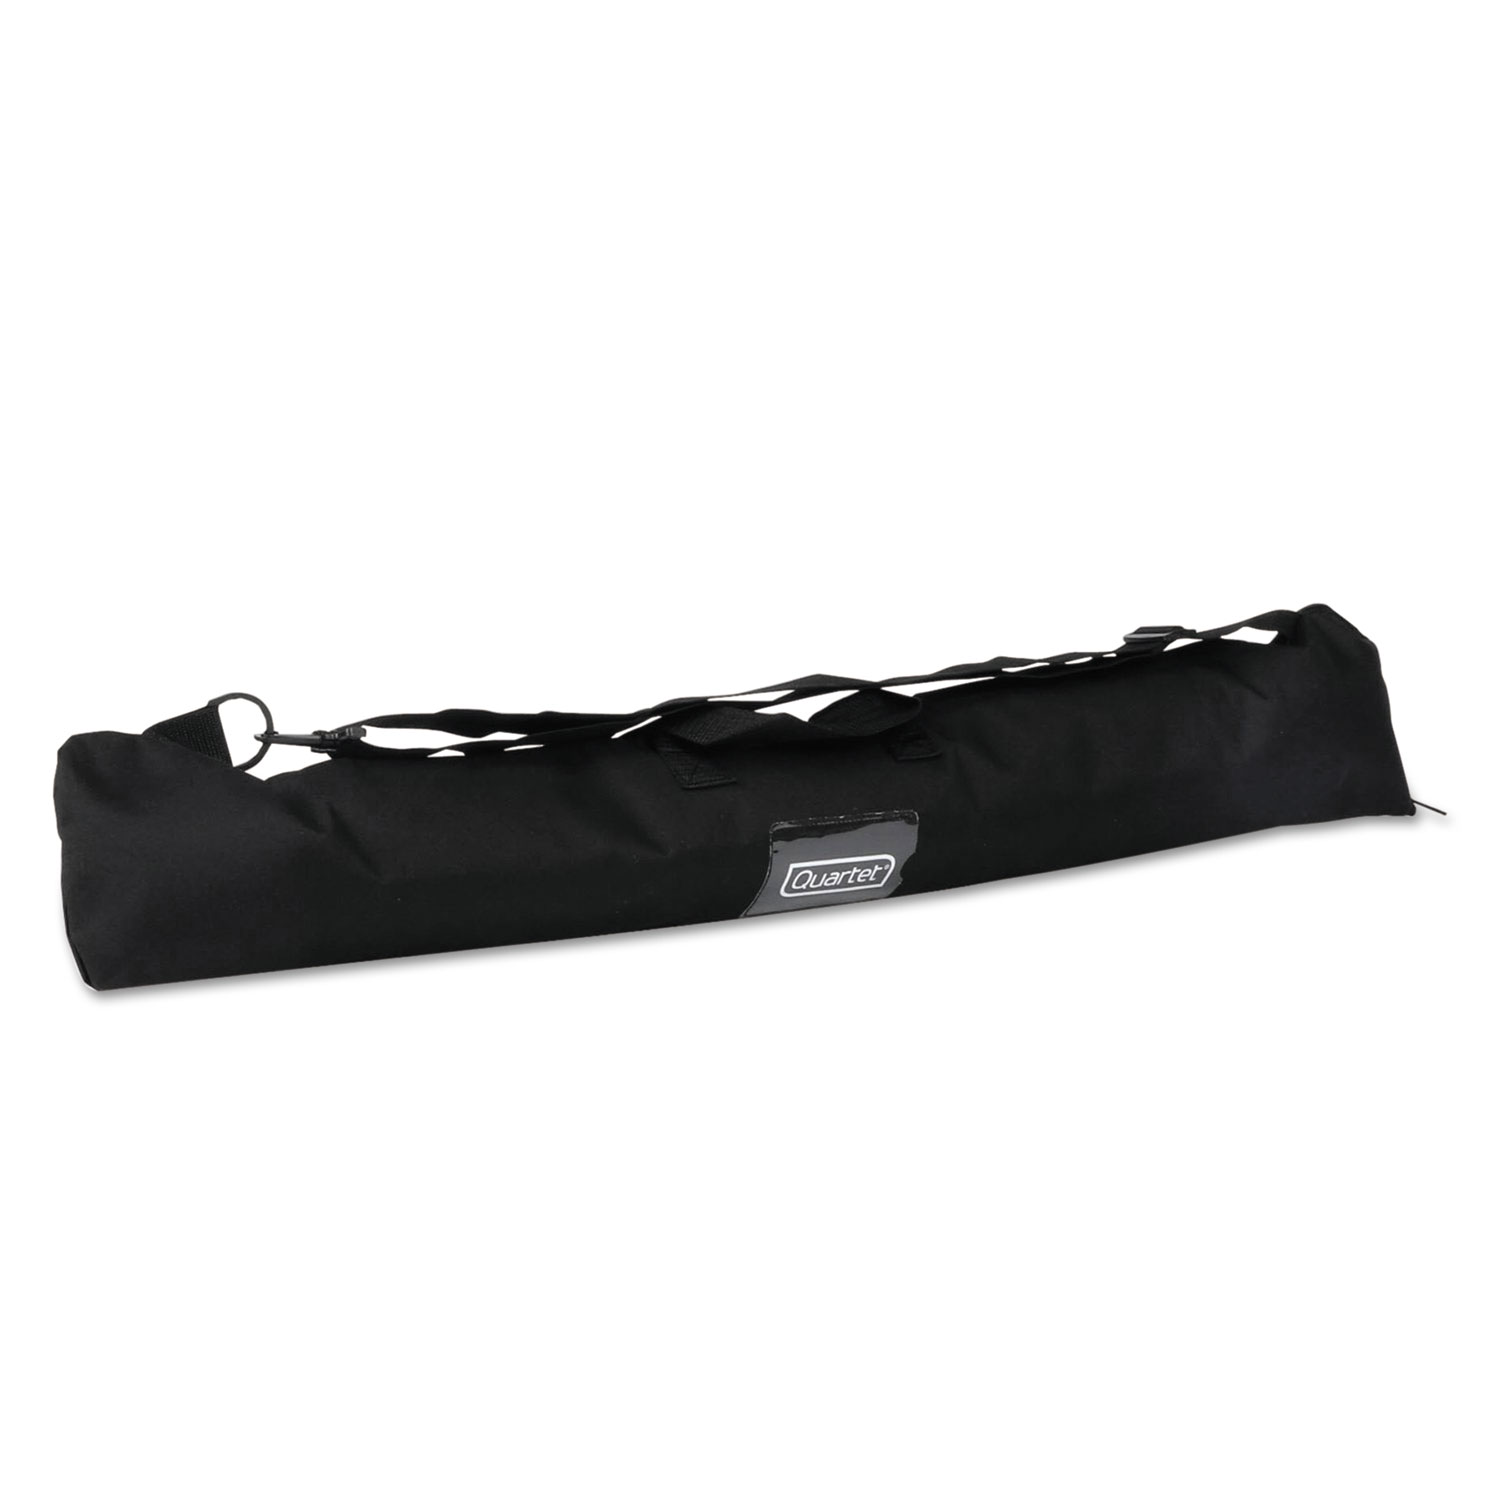 Display Easel Carrying Case, 38 1/5w x 1 1/2d x 6 1/2h, Nylon, Black